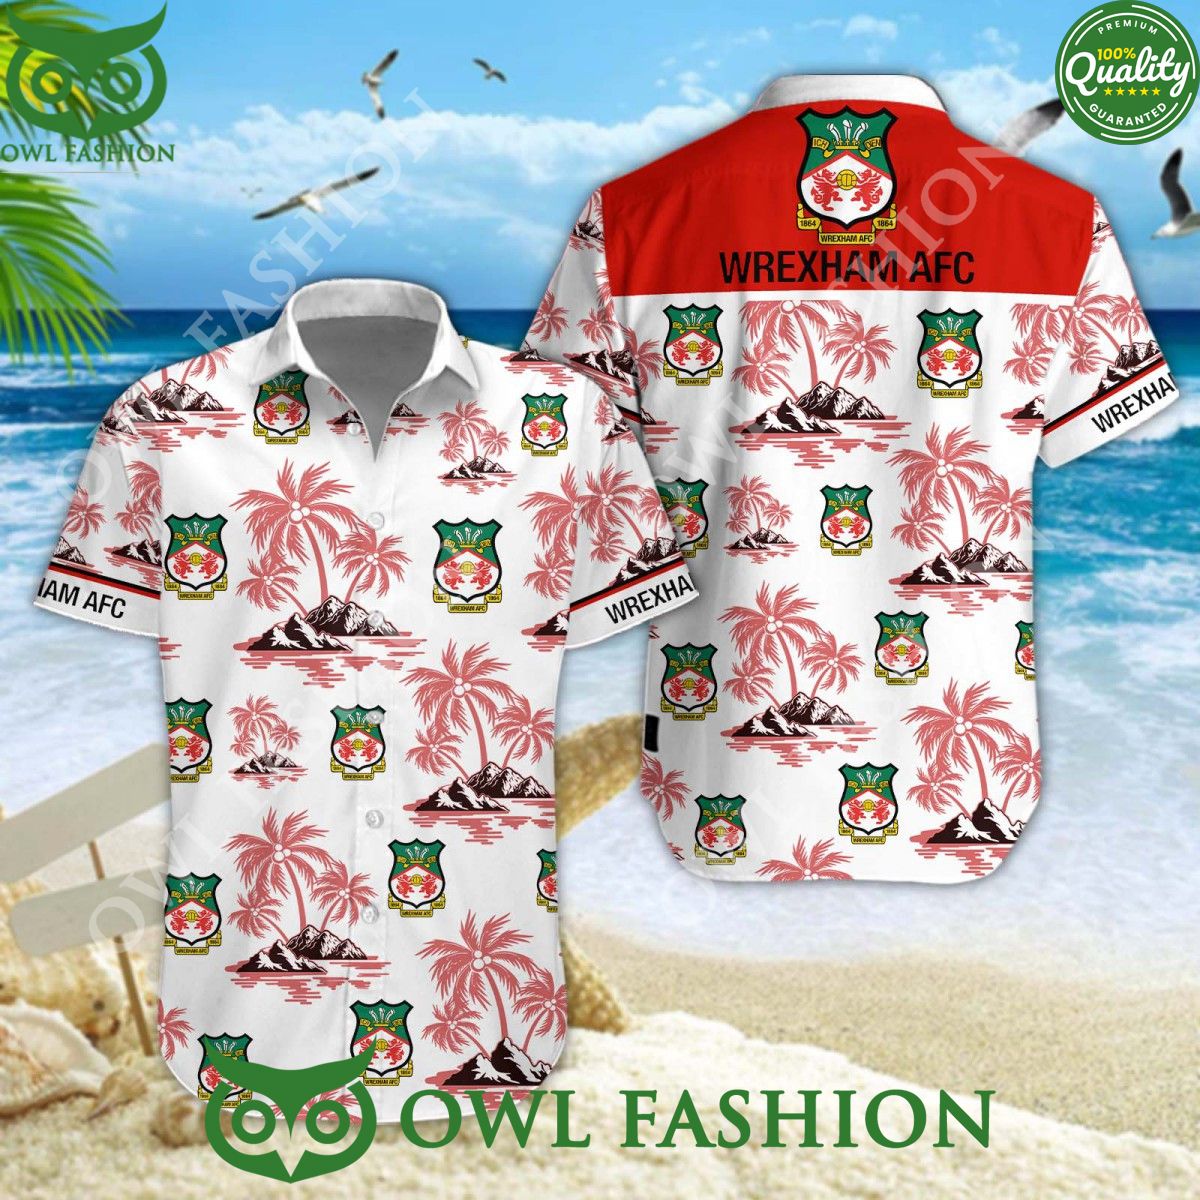 efl championship wrexham afc hawaiian shirt beach vibe 1 eJPGw.jpg